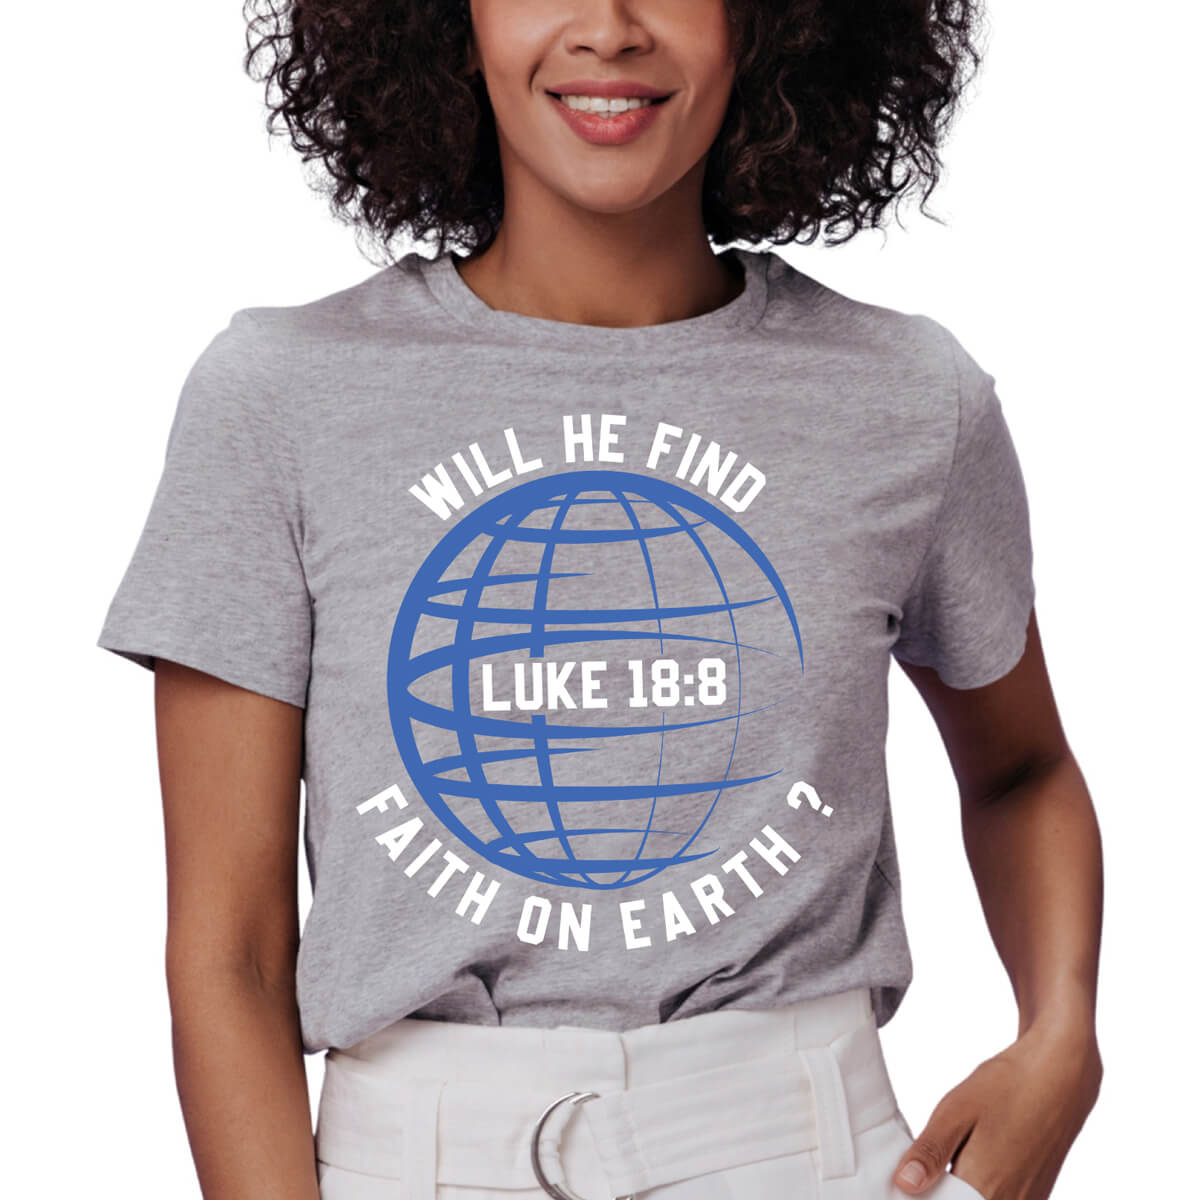 Will He Find Faith On Earth? T-Shirt